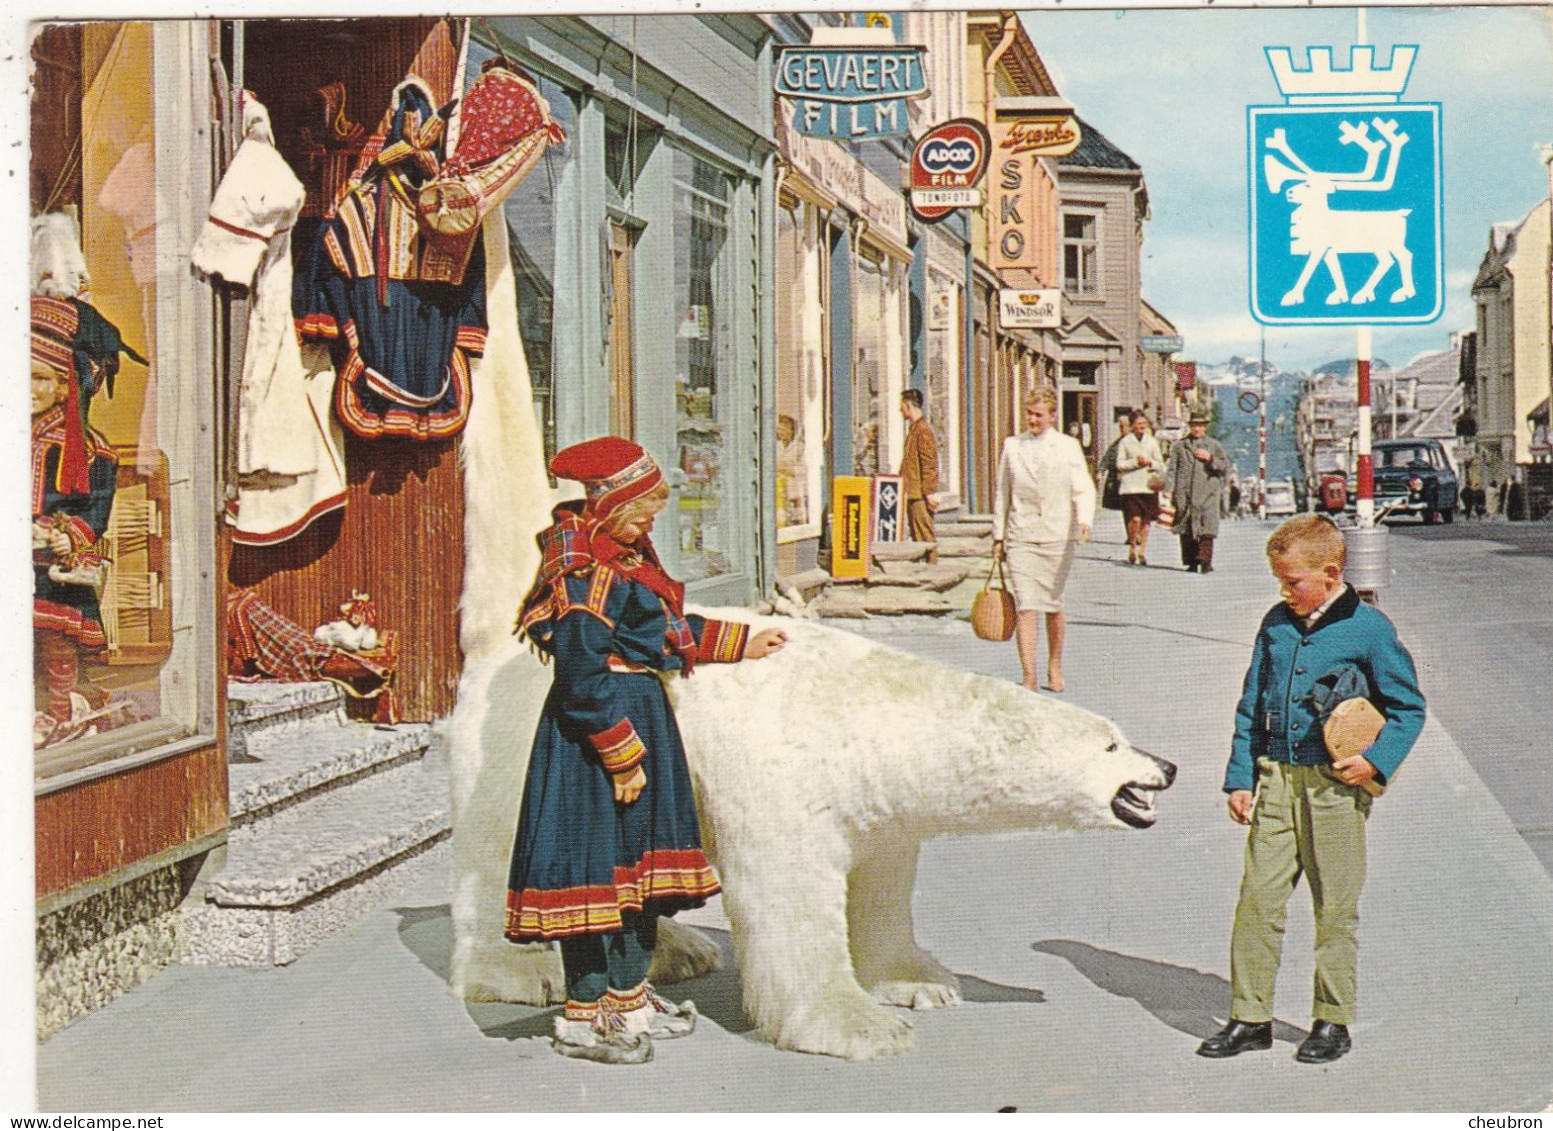 NORVEGE. TROMSO ( ENVOYE DE). " THE ICE BEAR IN THE MAIN STREET ". ANNEE 1971 + TEXTE + TIMBRE - Norvège